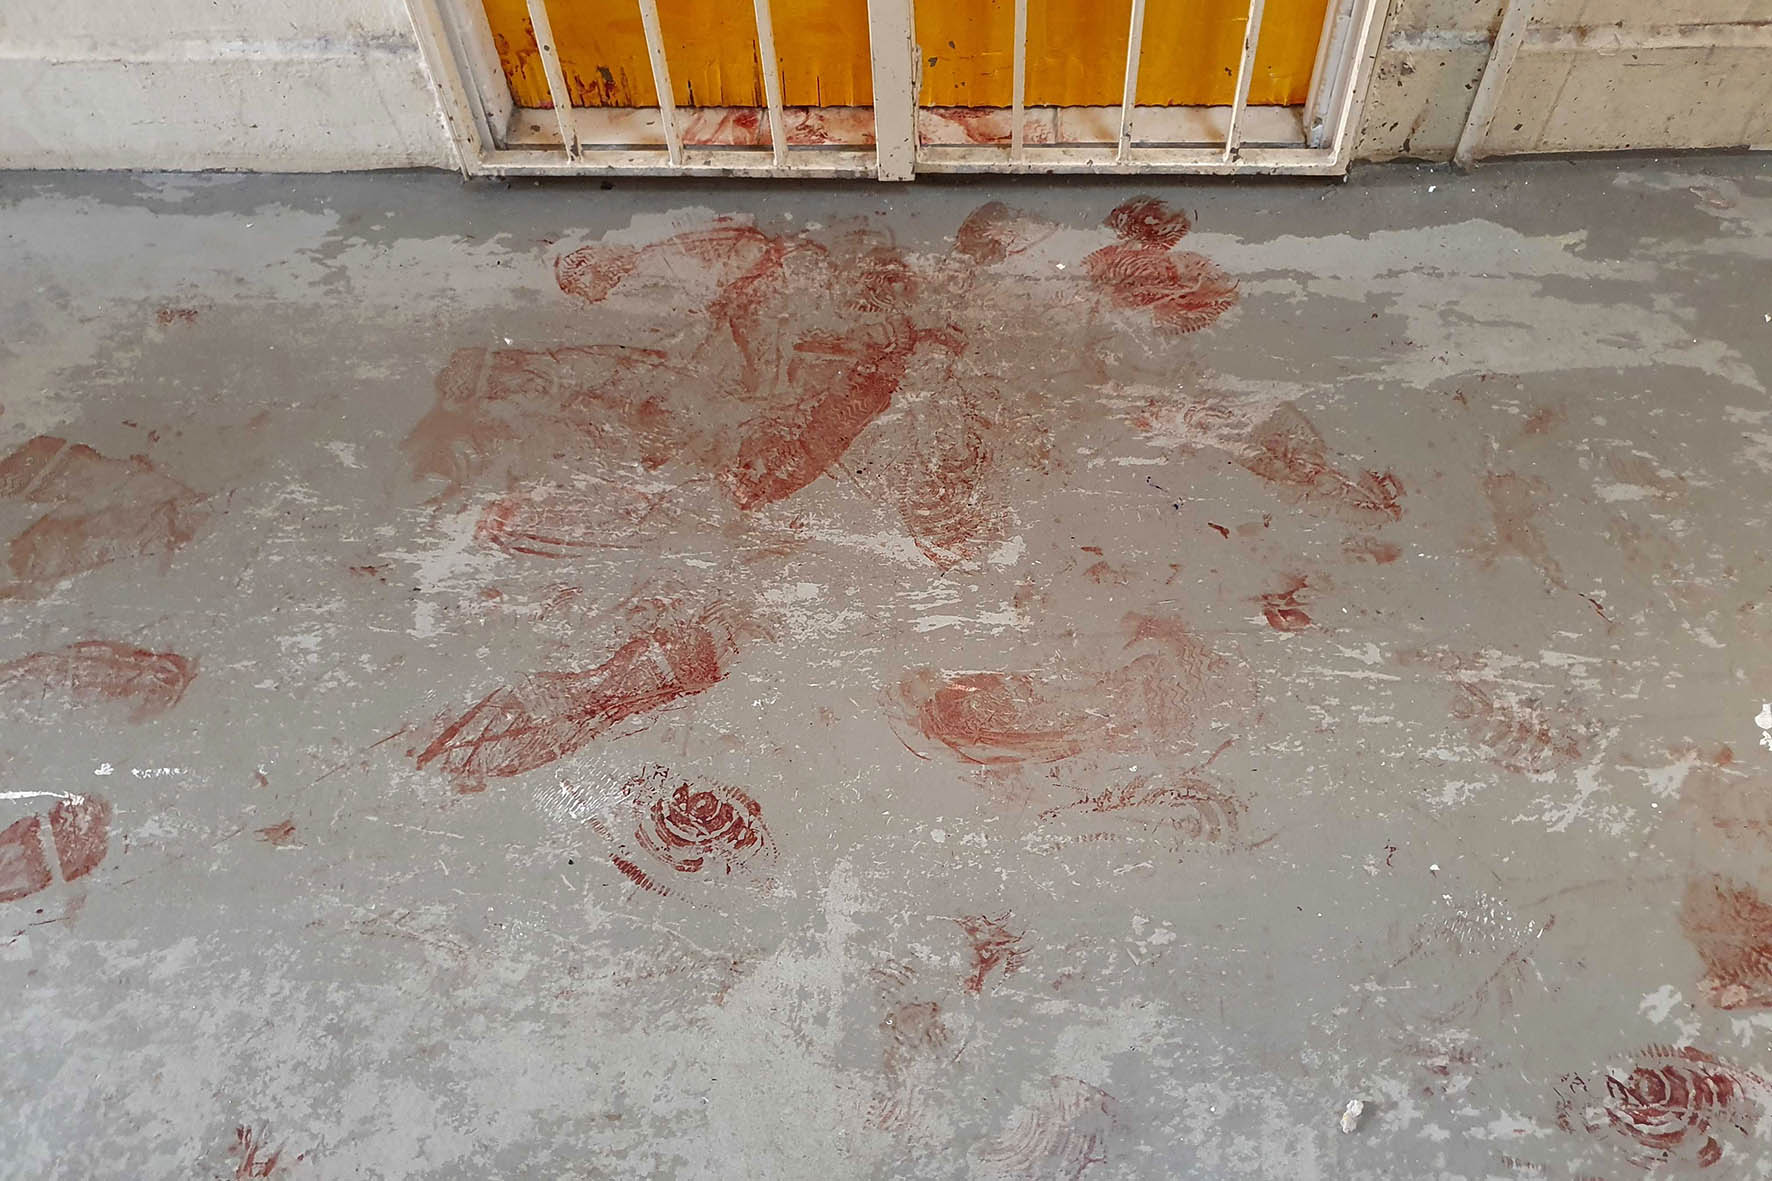 Bloody shoe prints seen outside the unit where the murder happened. Photo Taufiq Zalizan/TODAY